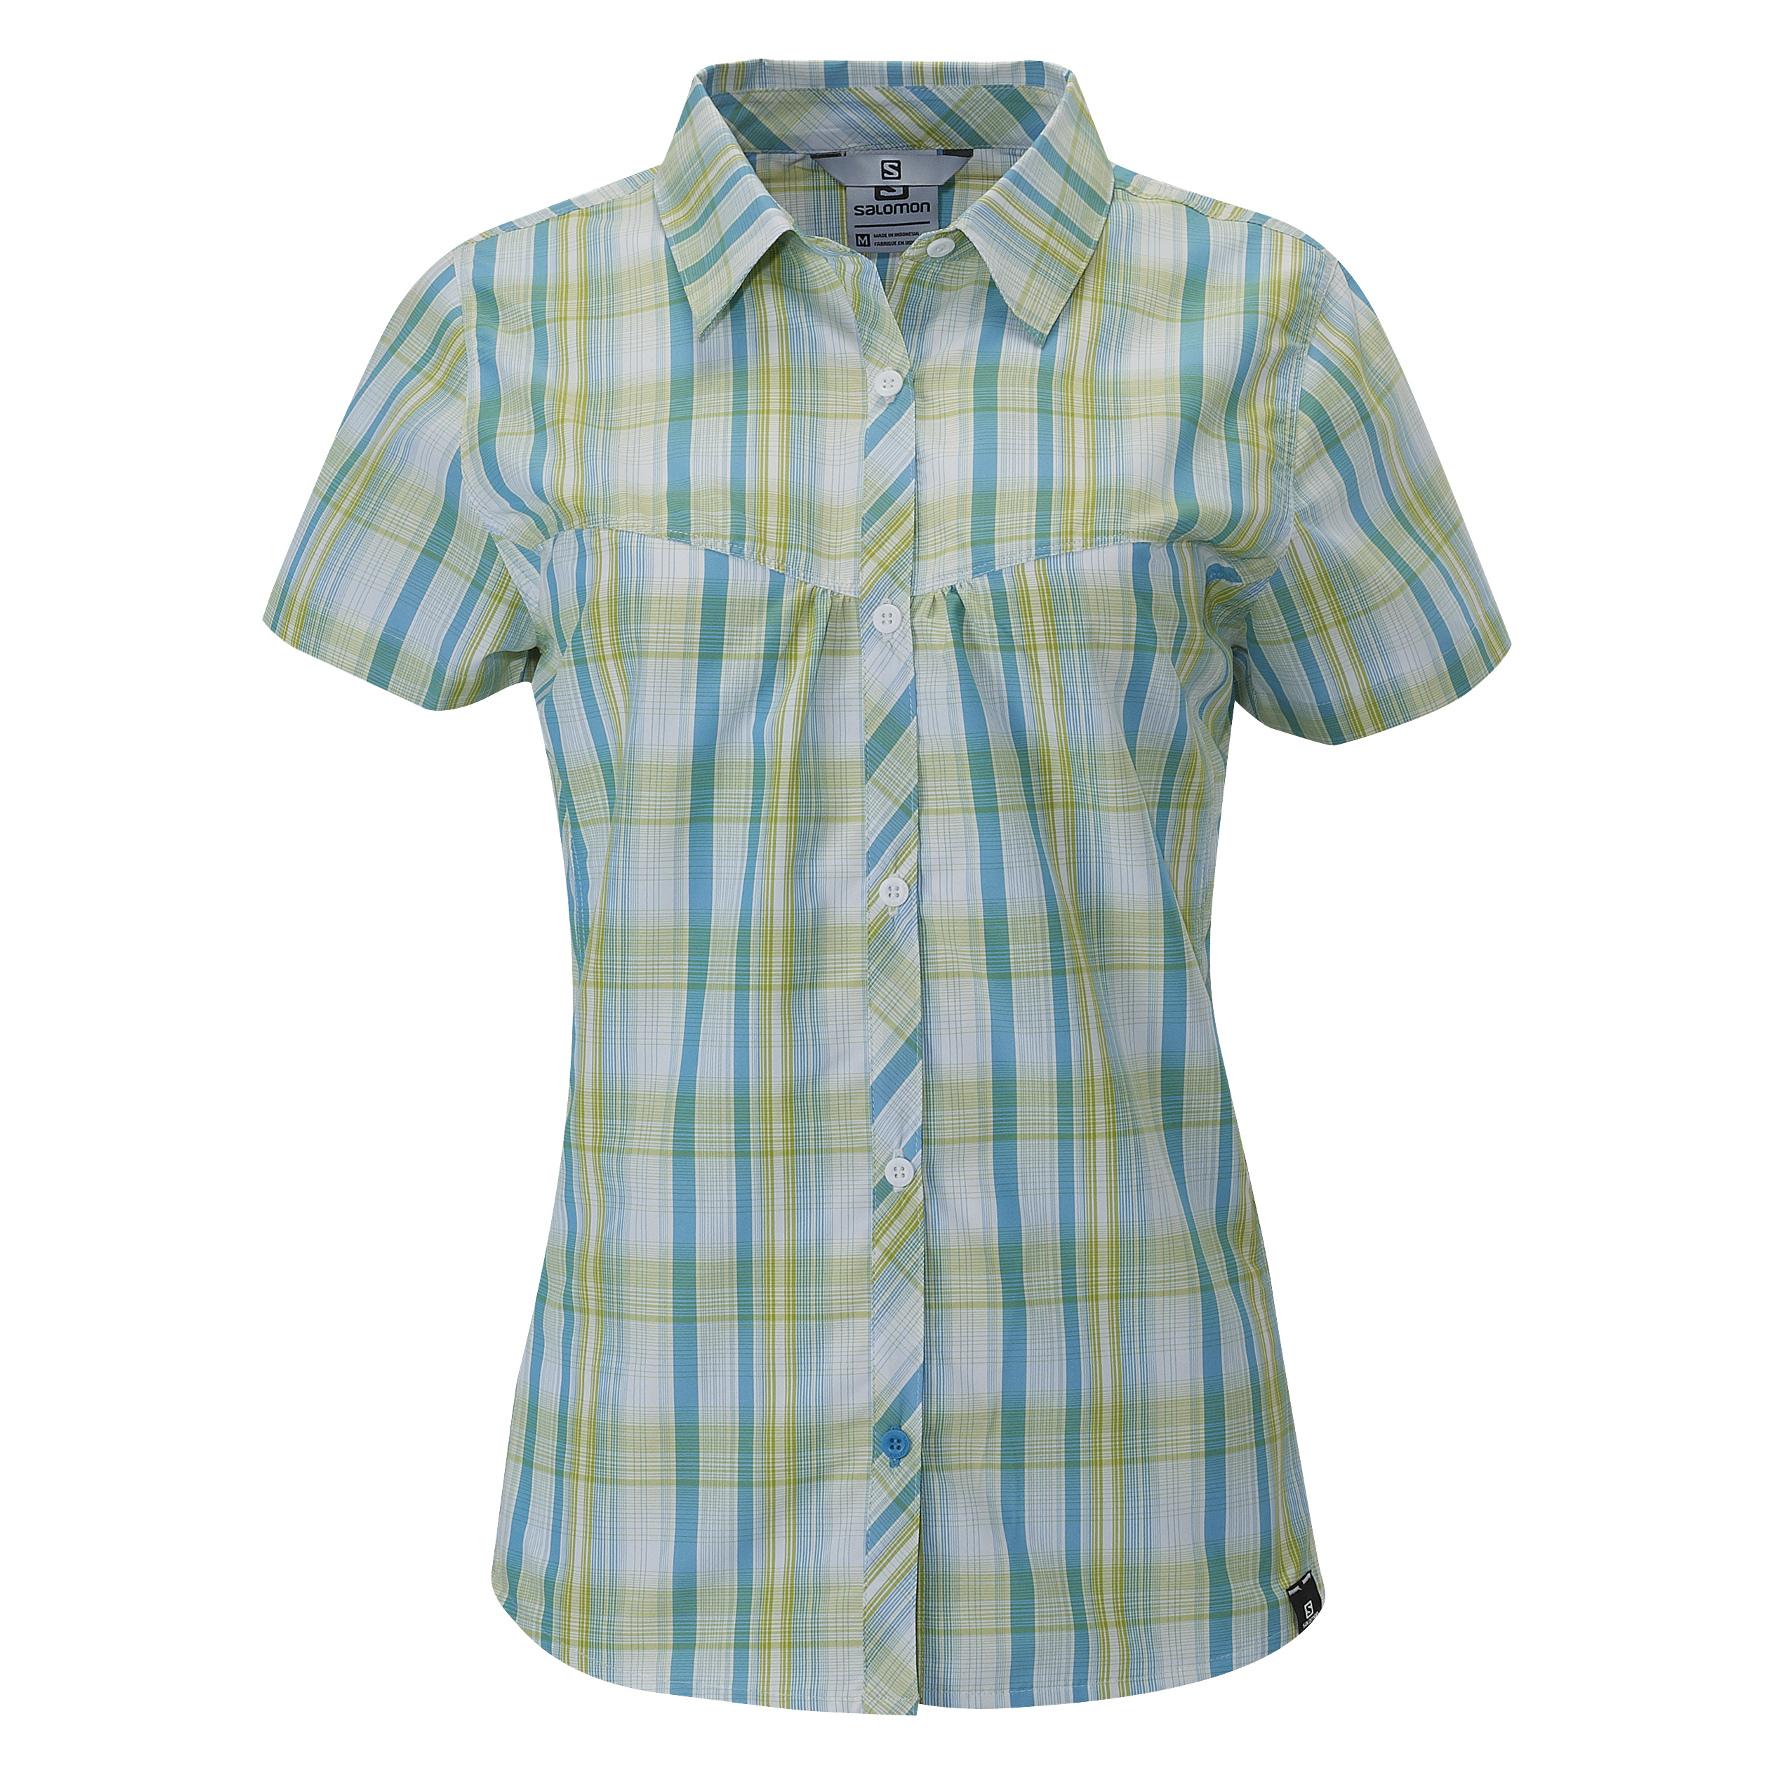 Foto Camisa de montaña Salomon Checks verde/azul/blanco para mujer, m foto 458954